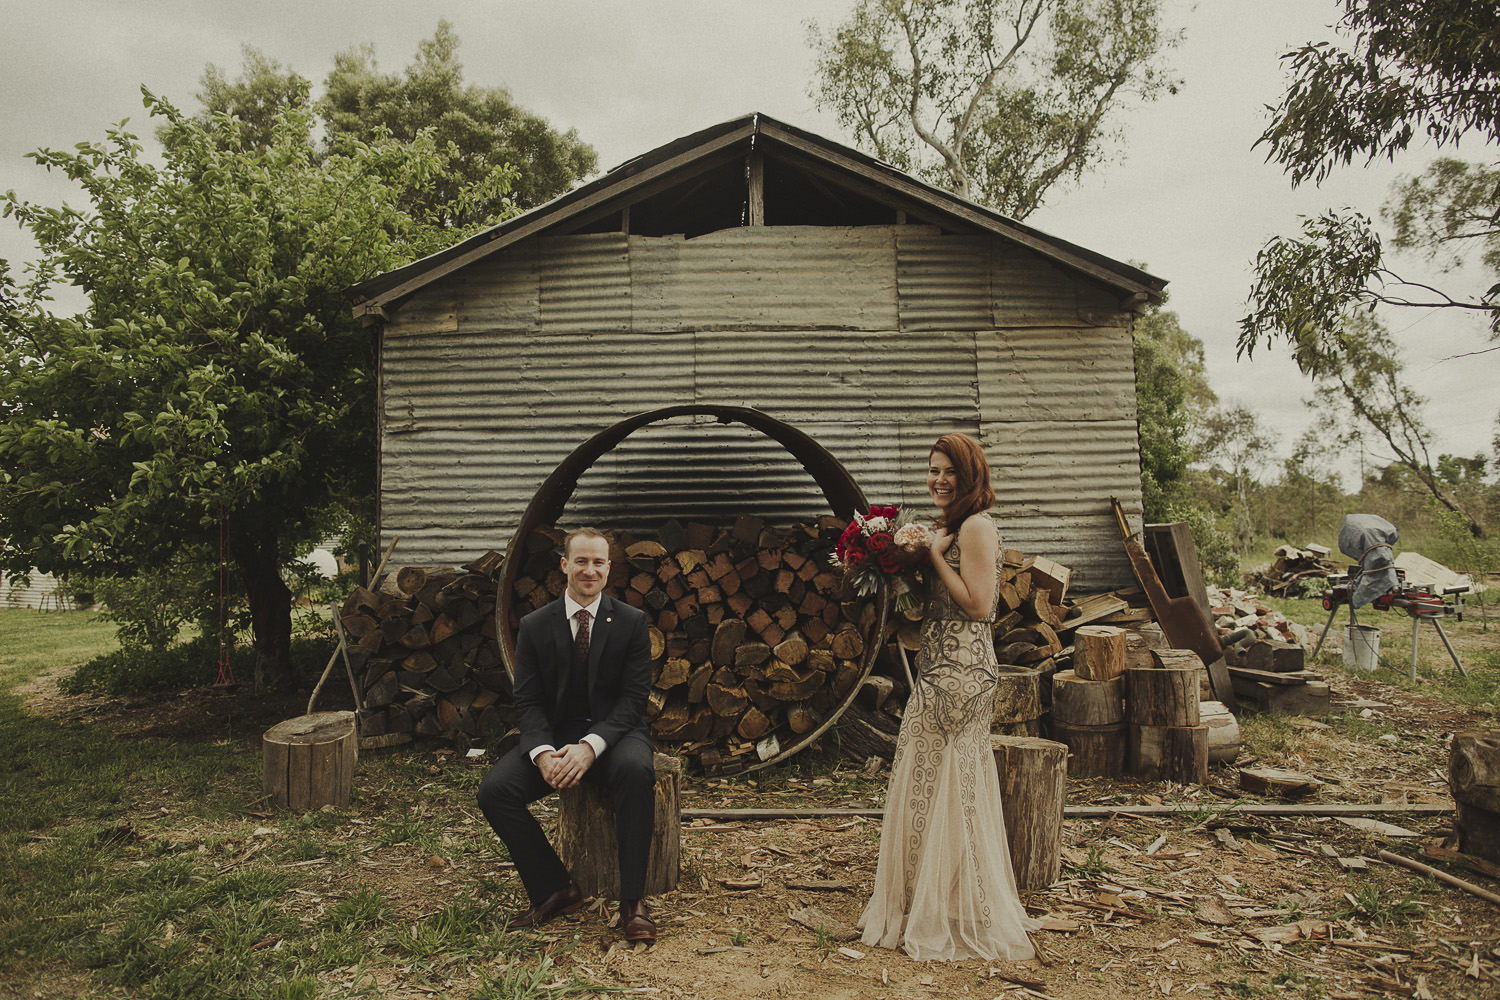 You Two and Your Crew – Australian Wedding Photographer